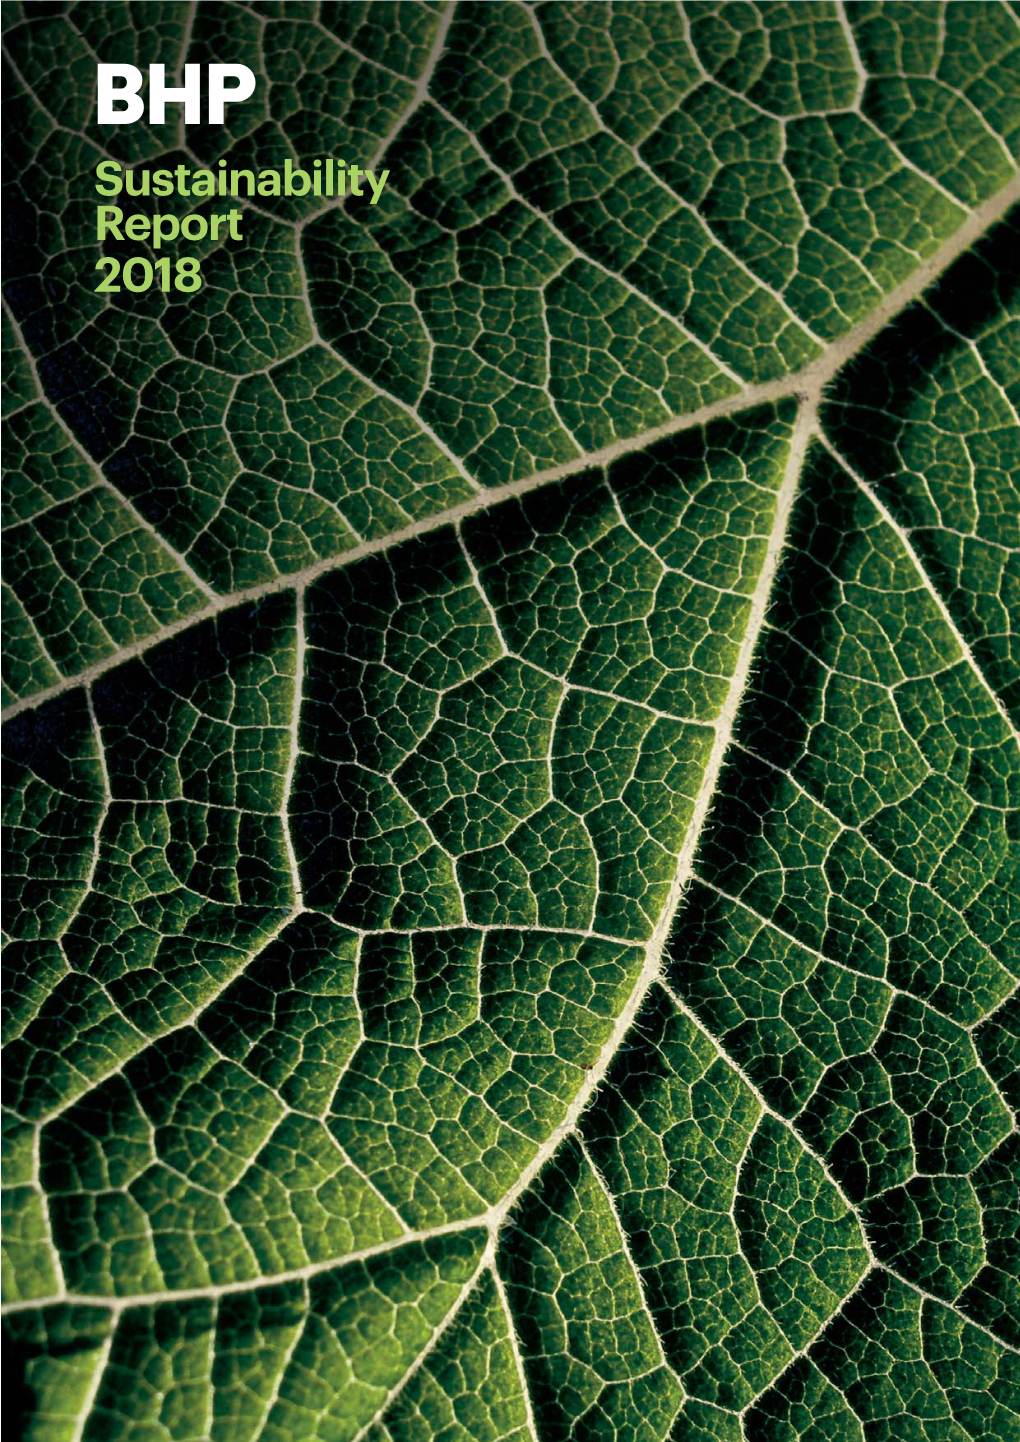 8411 BHPB Sustainability Report 2018.Indd